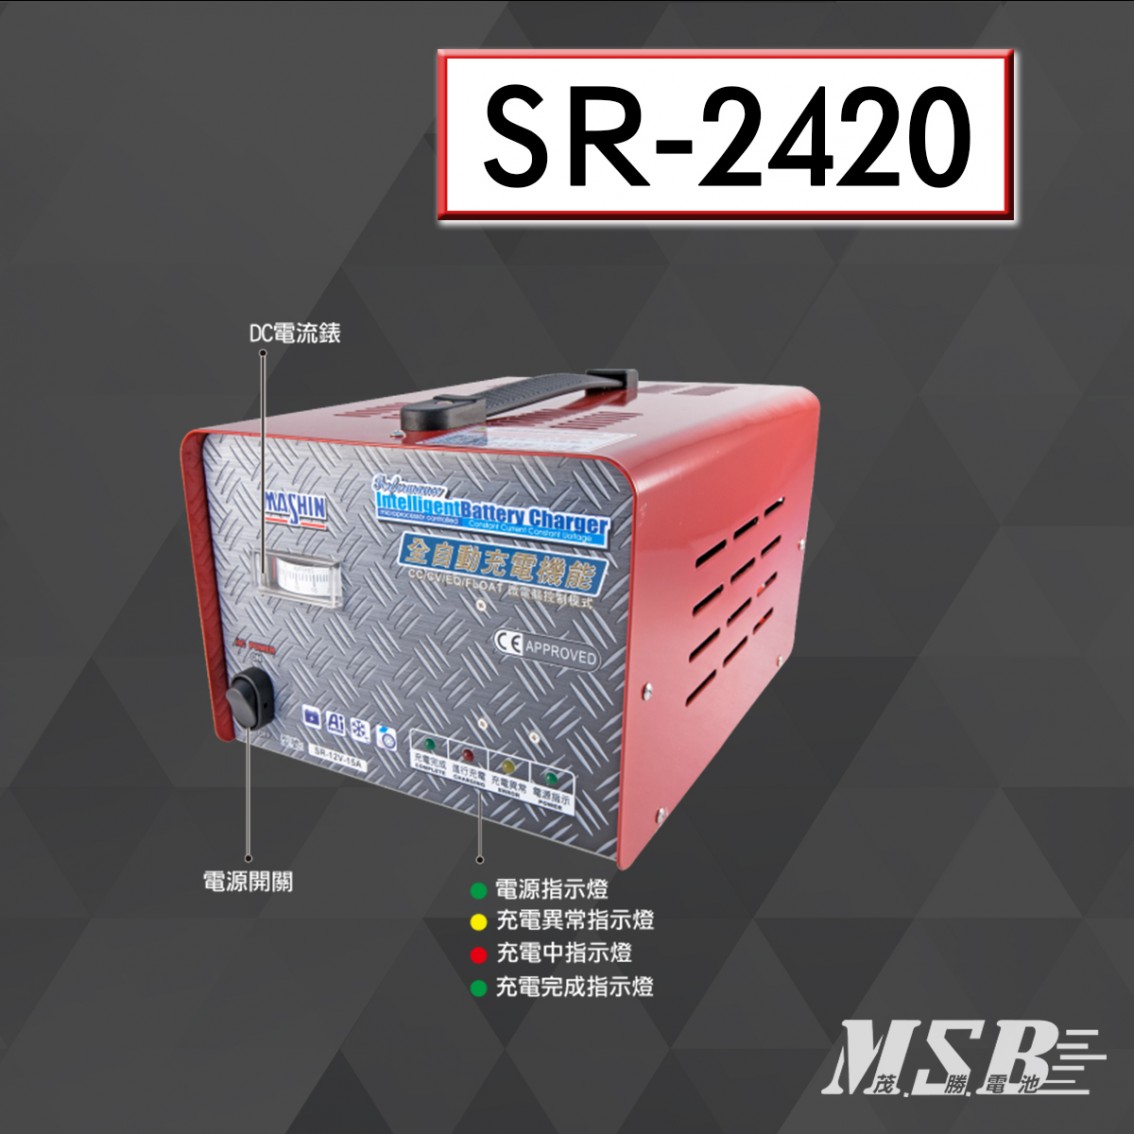 SR-2420